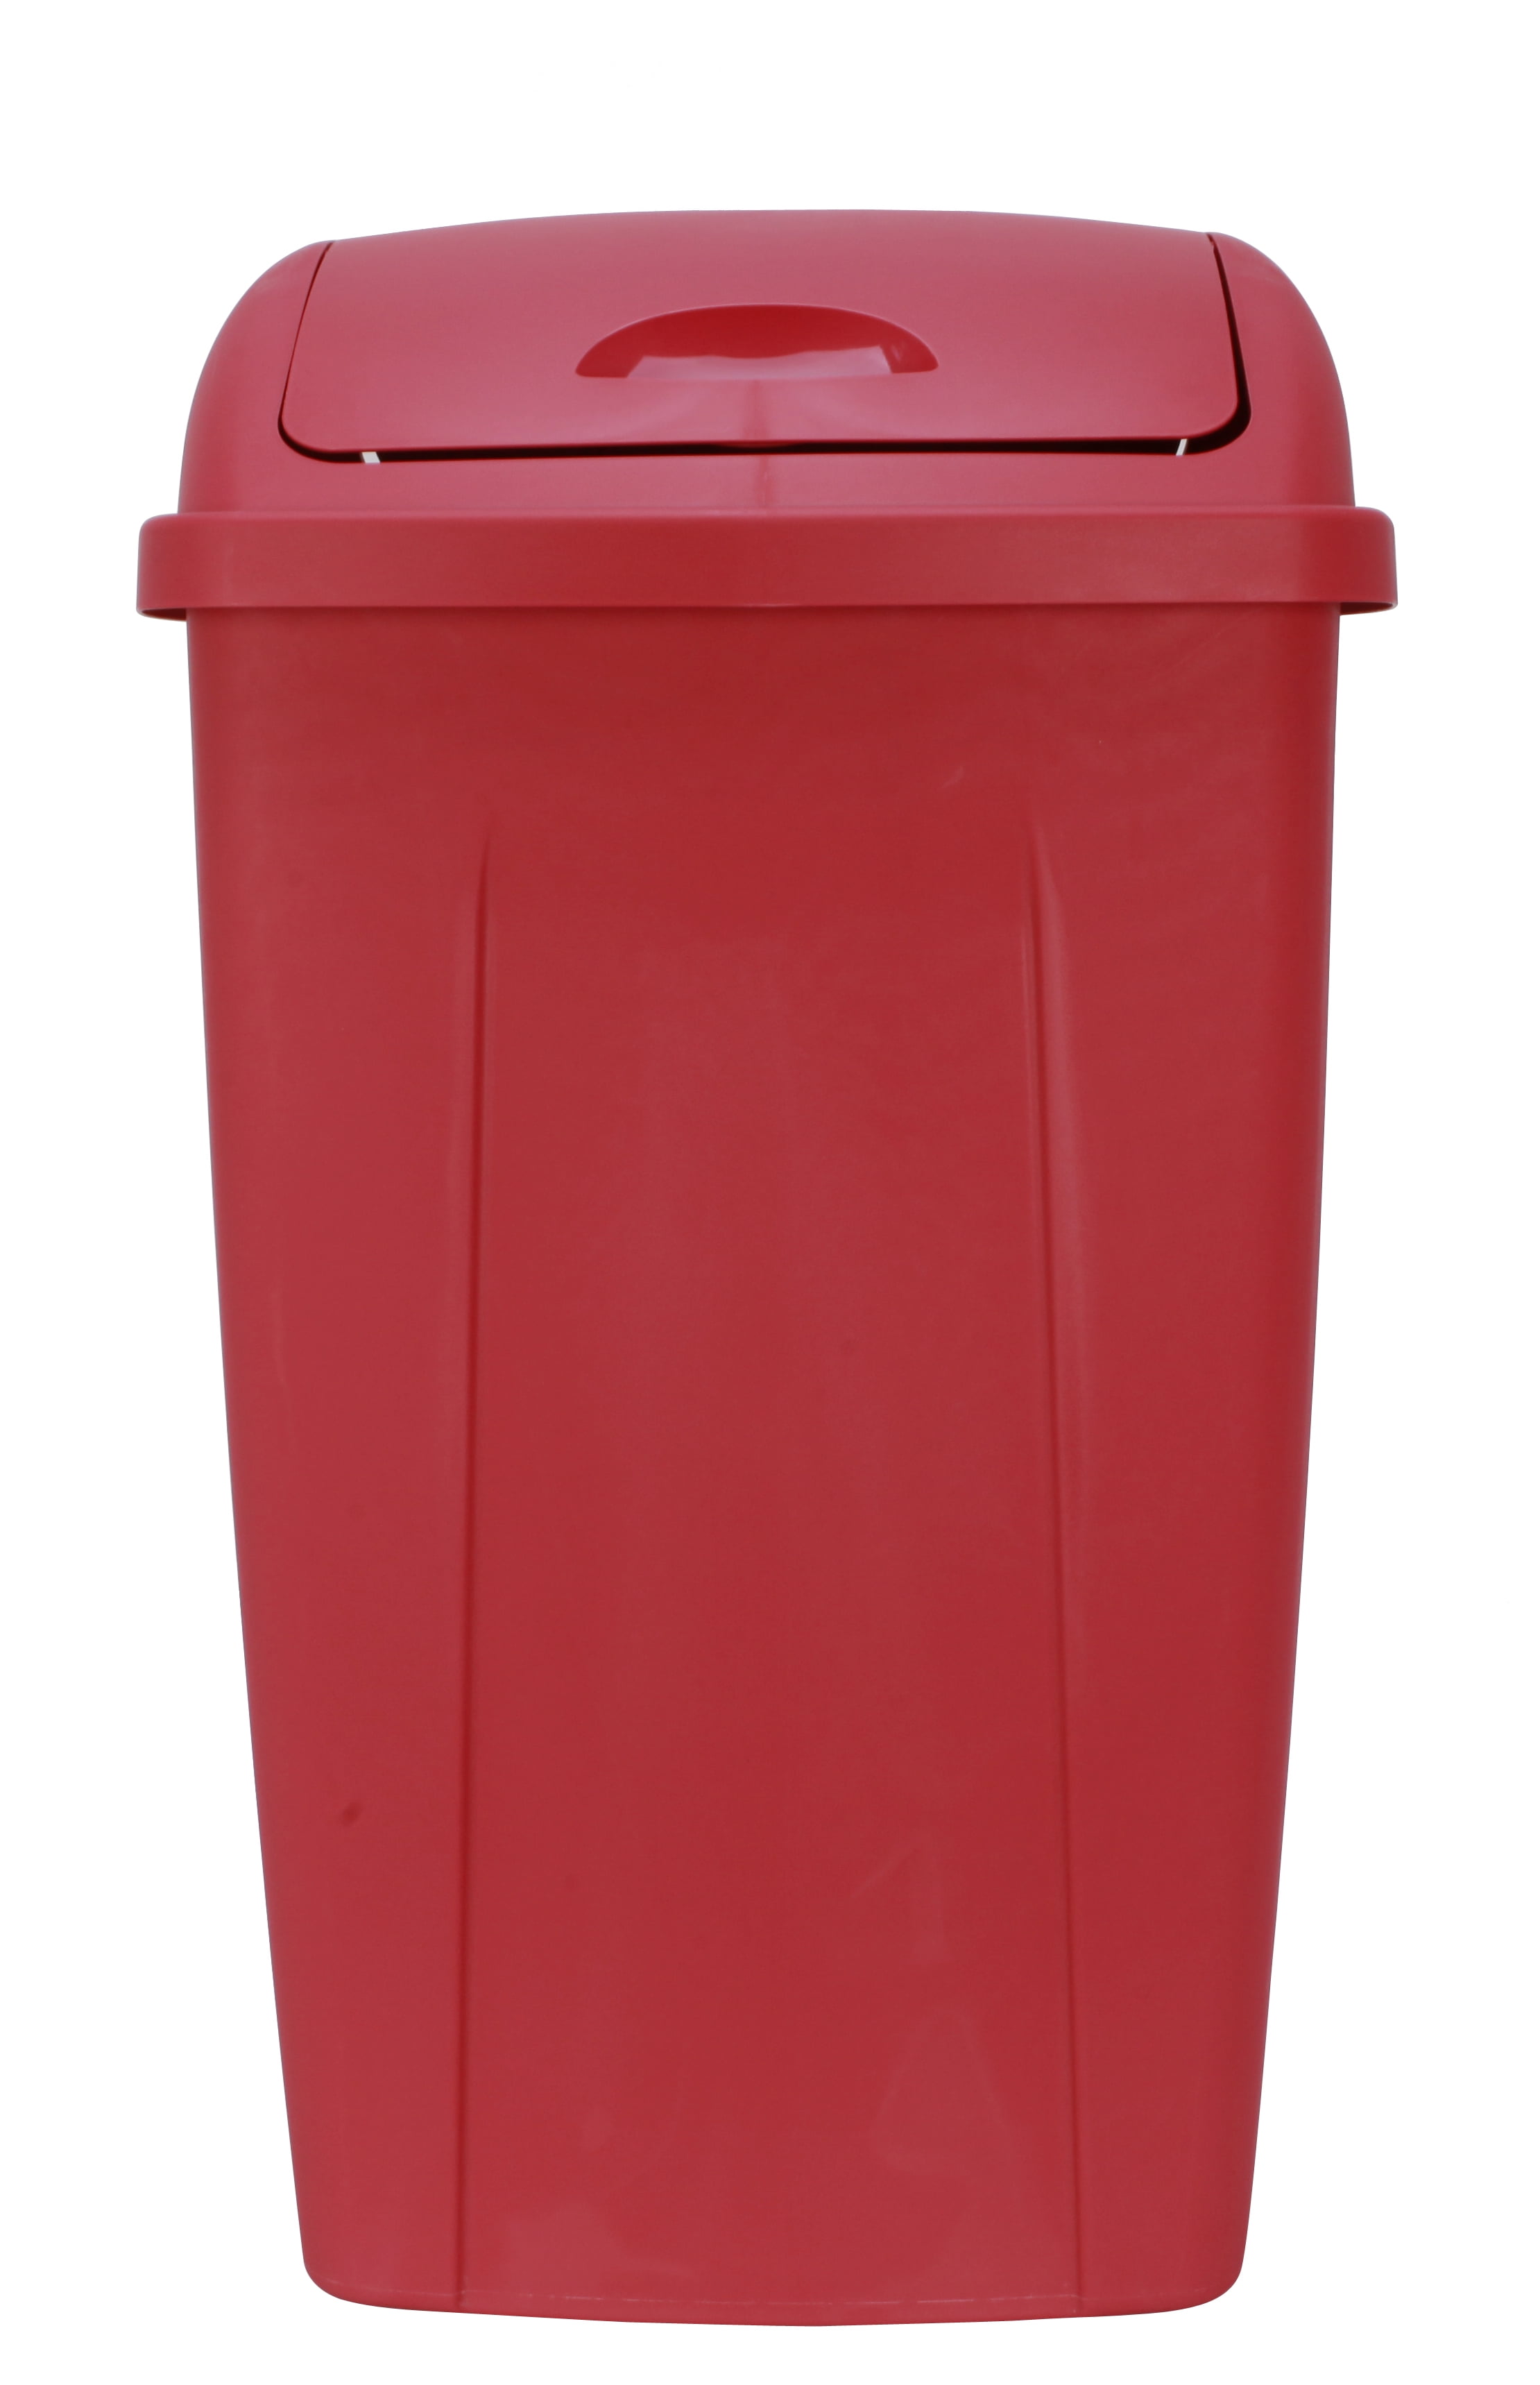 Red Plastic Flexi Bin Waste Paper Basket Rubbish Tub Kids Home Office Bedroom 